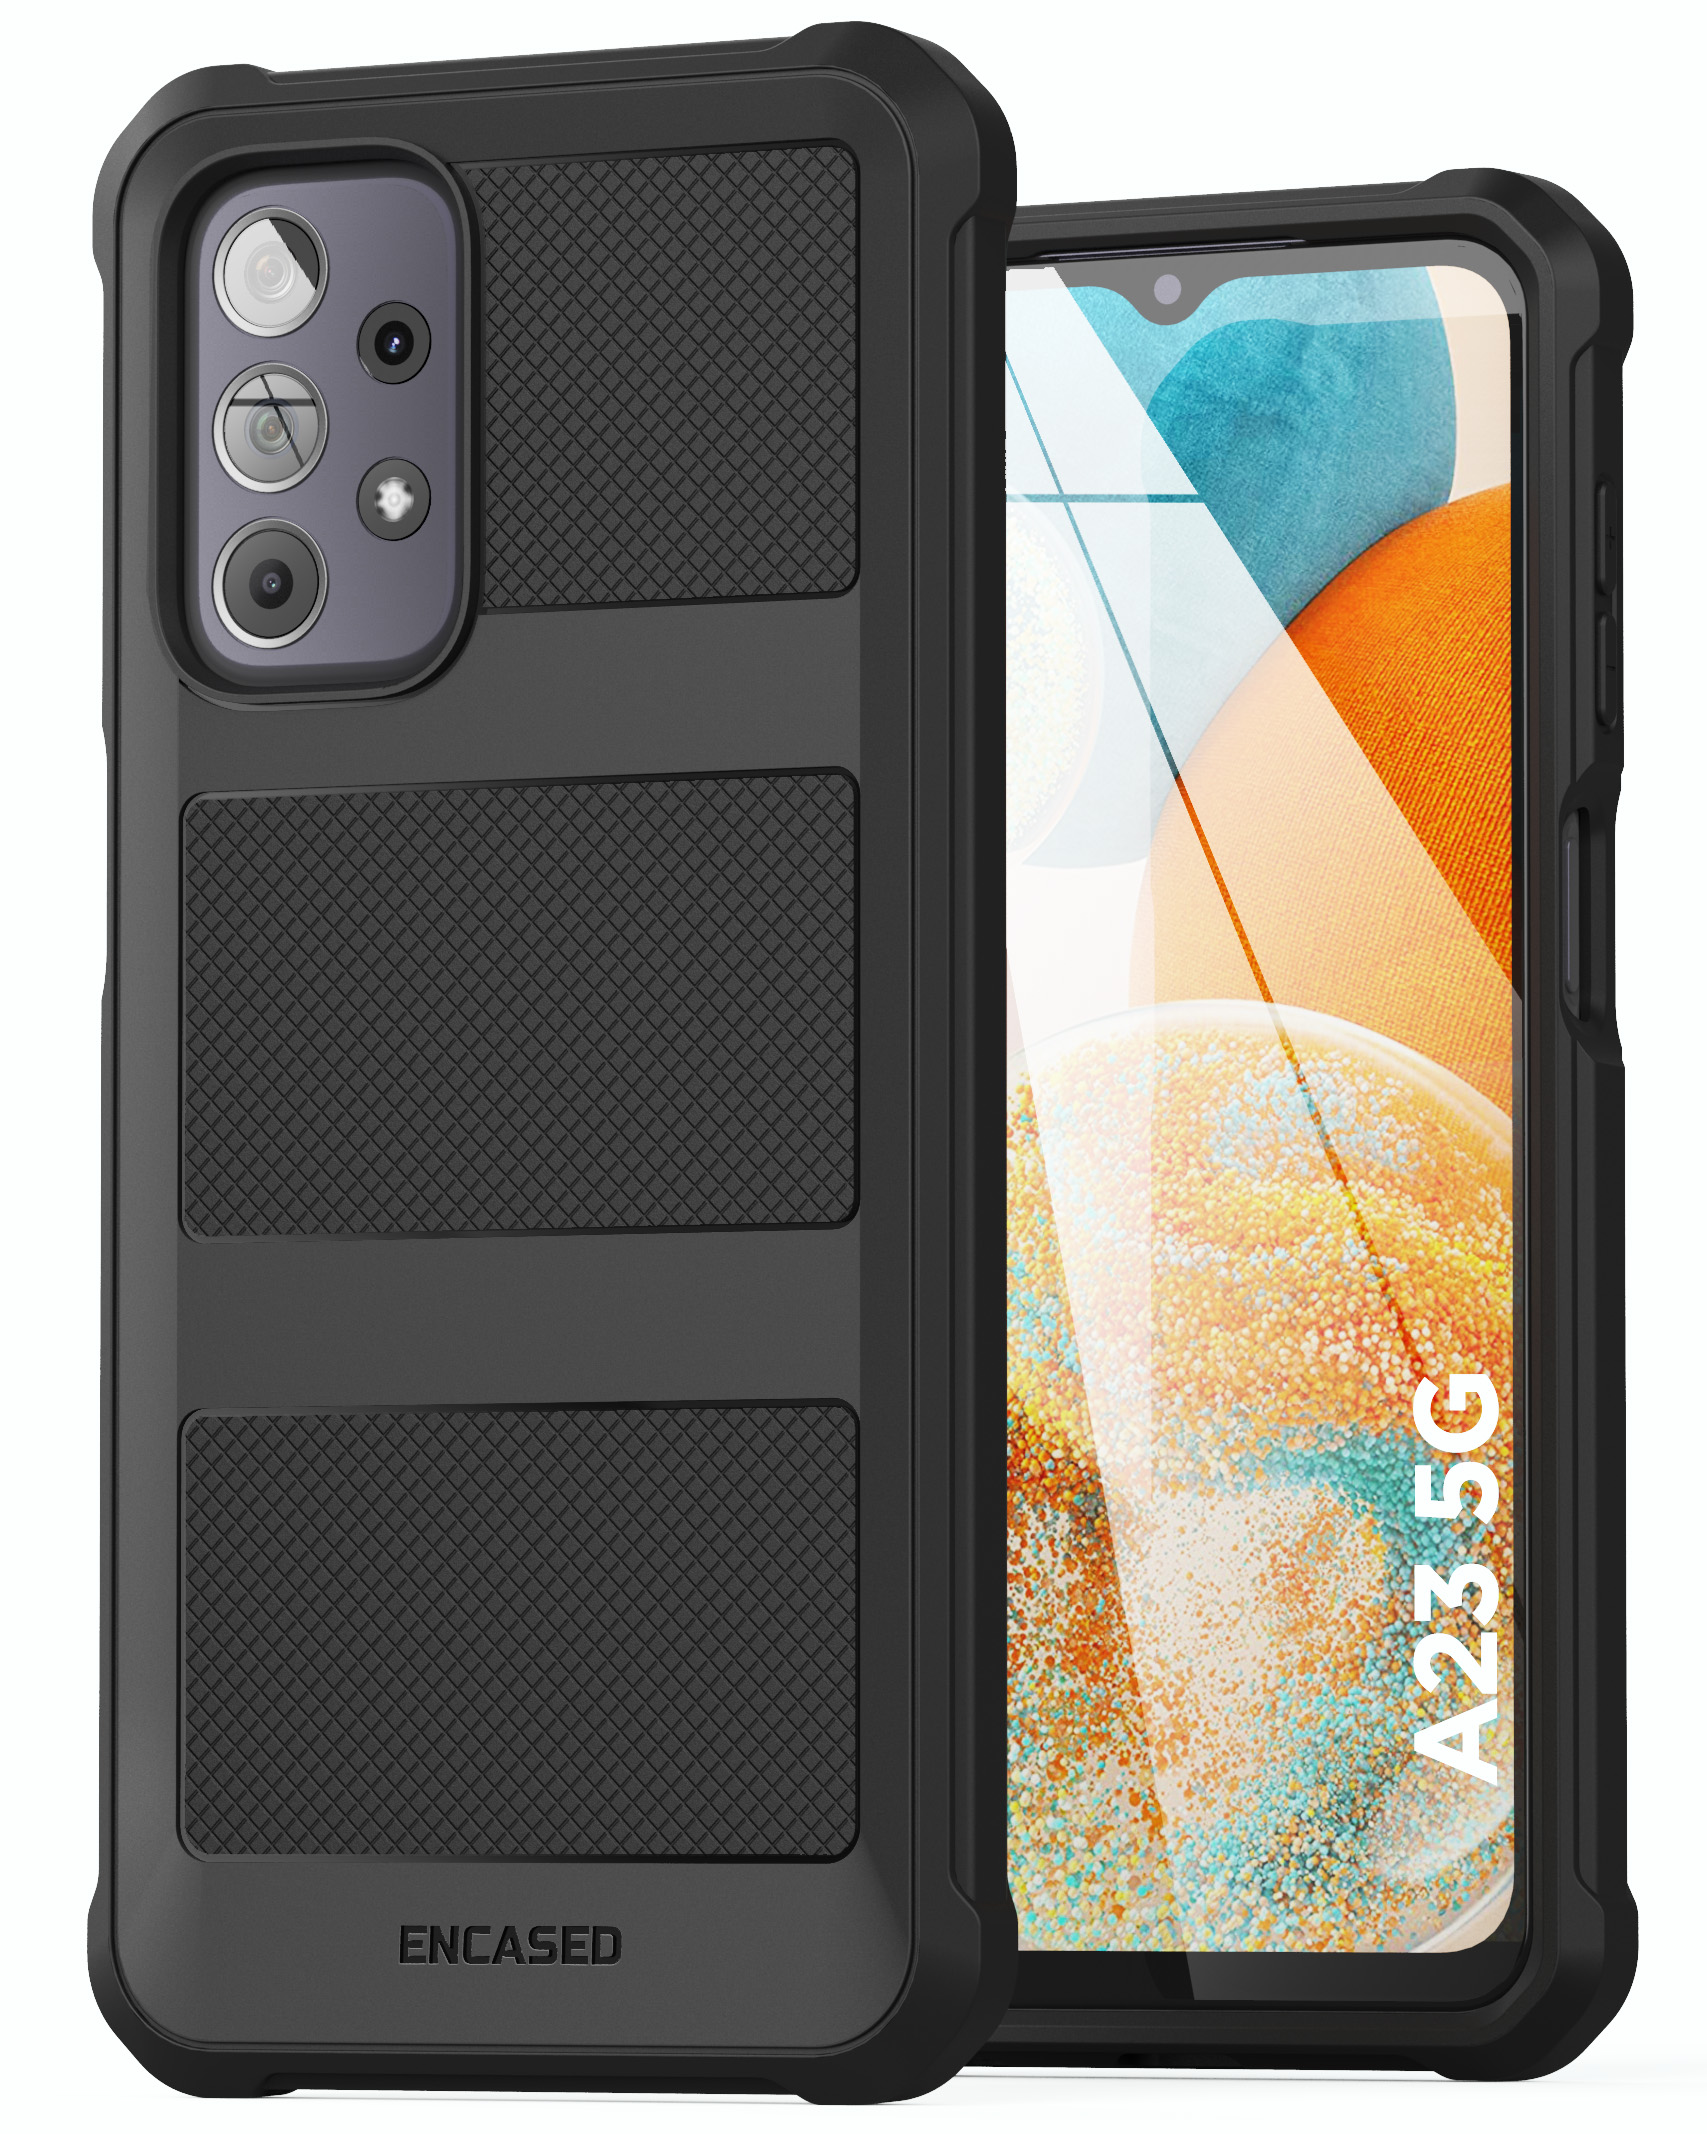 NIFFPD Galaxy A23 5G Case, Samsung A23 5G Case, Shockproof Drop